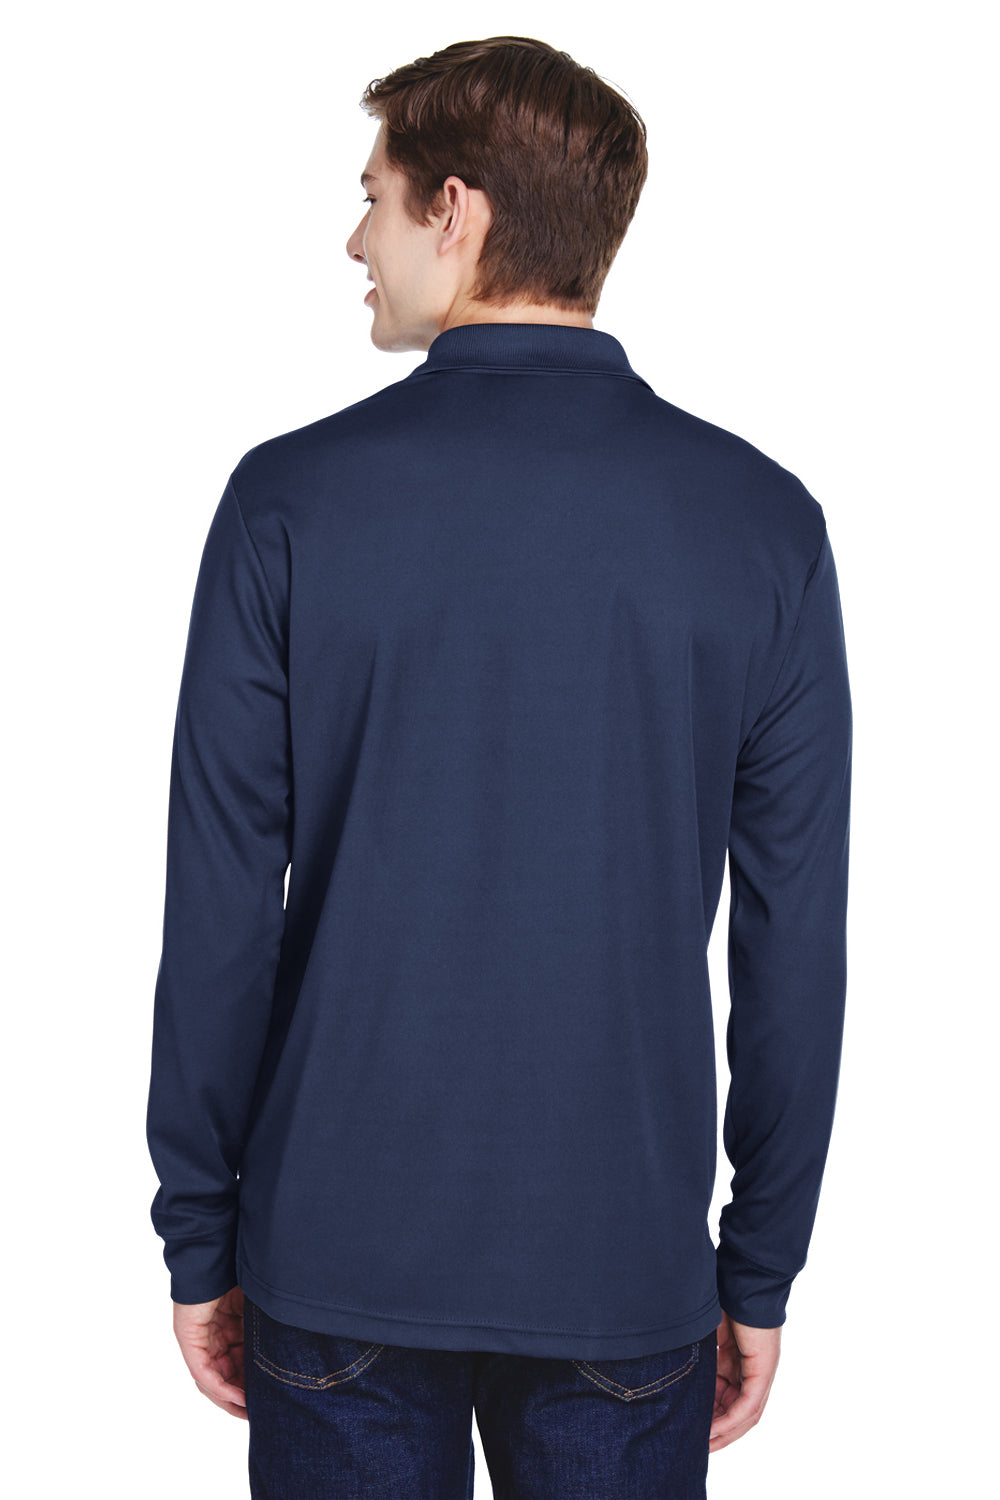 Core 365 88192P Mens Pinnacle Performance Moisture Wicking Long Sleeve Polo Shirt w/ Pocket Navy Blue Back